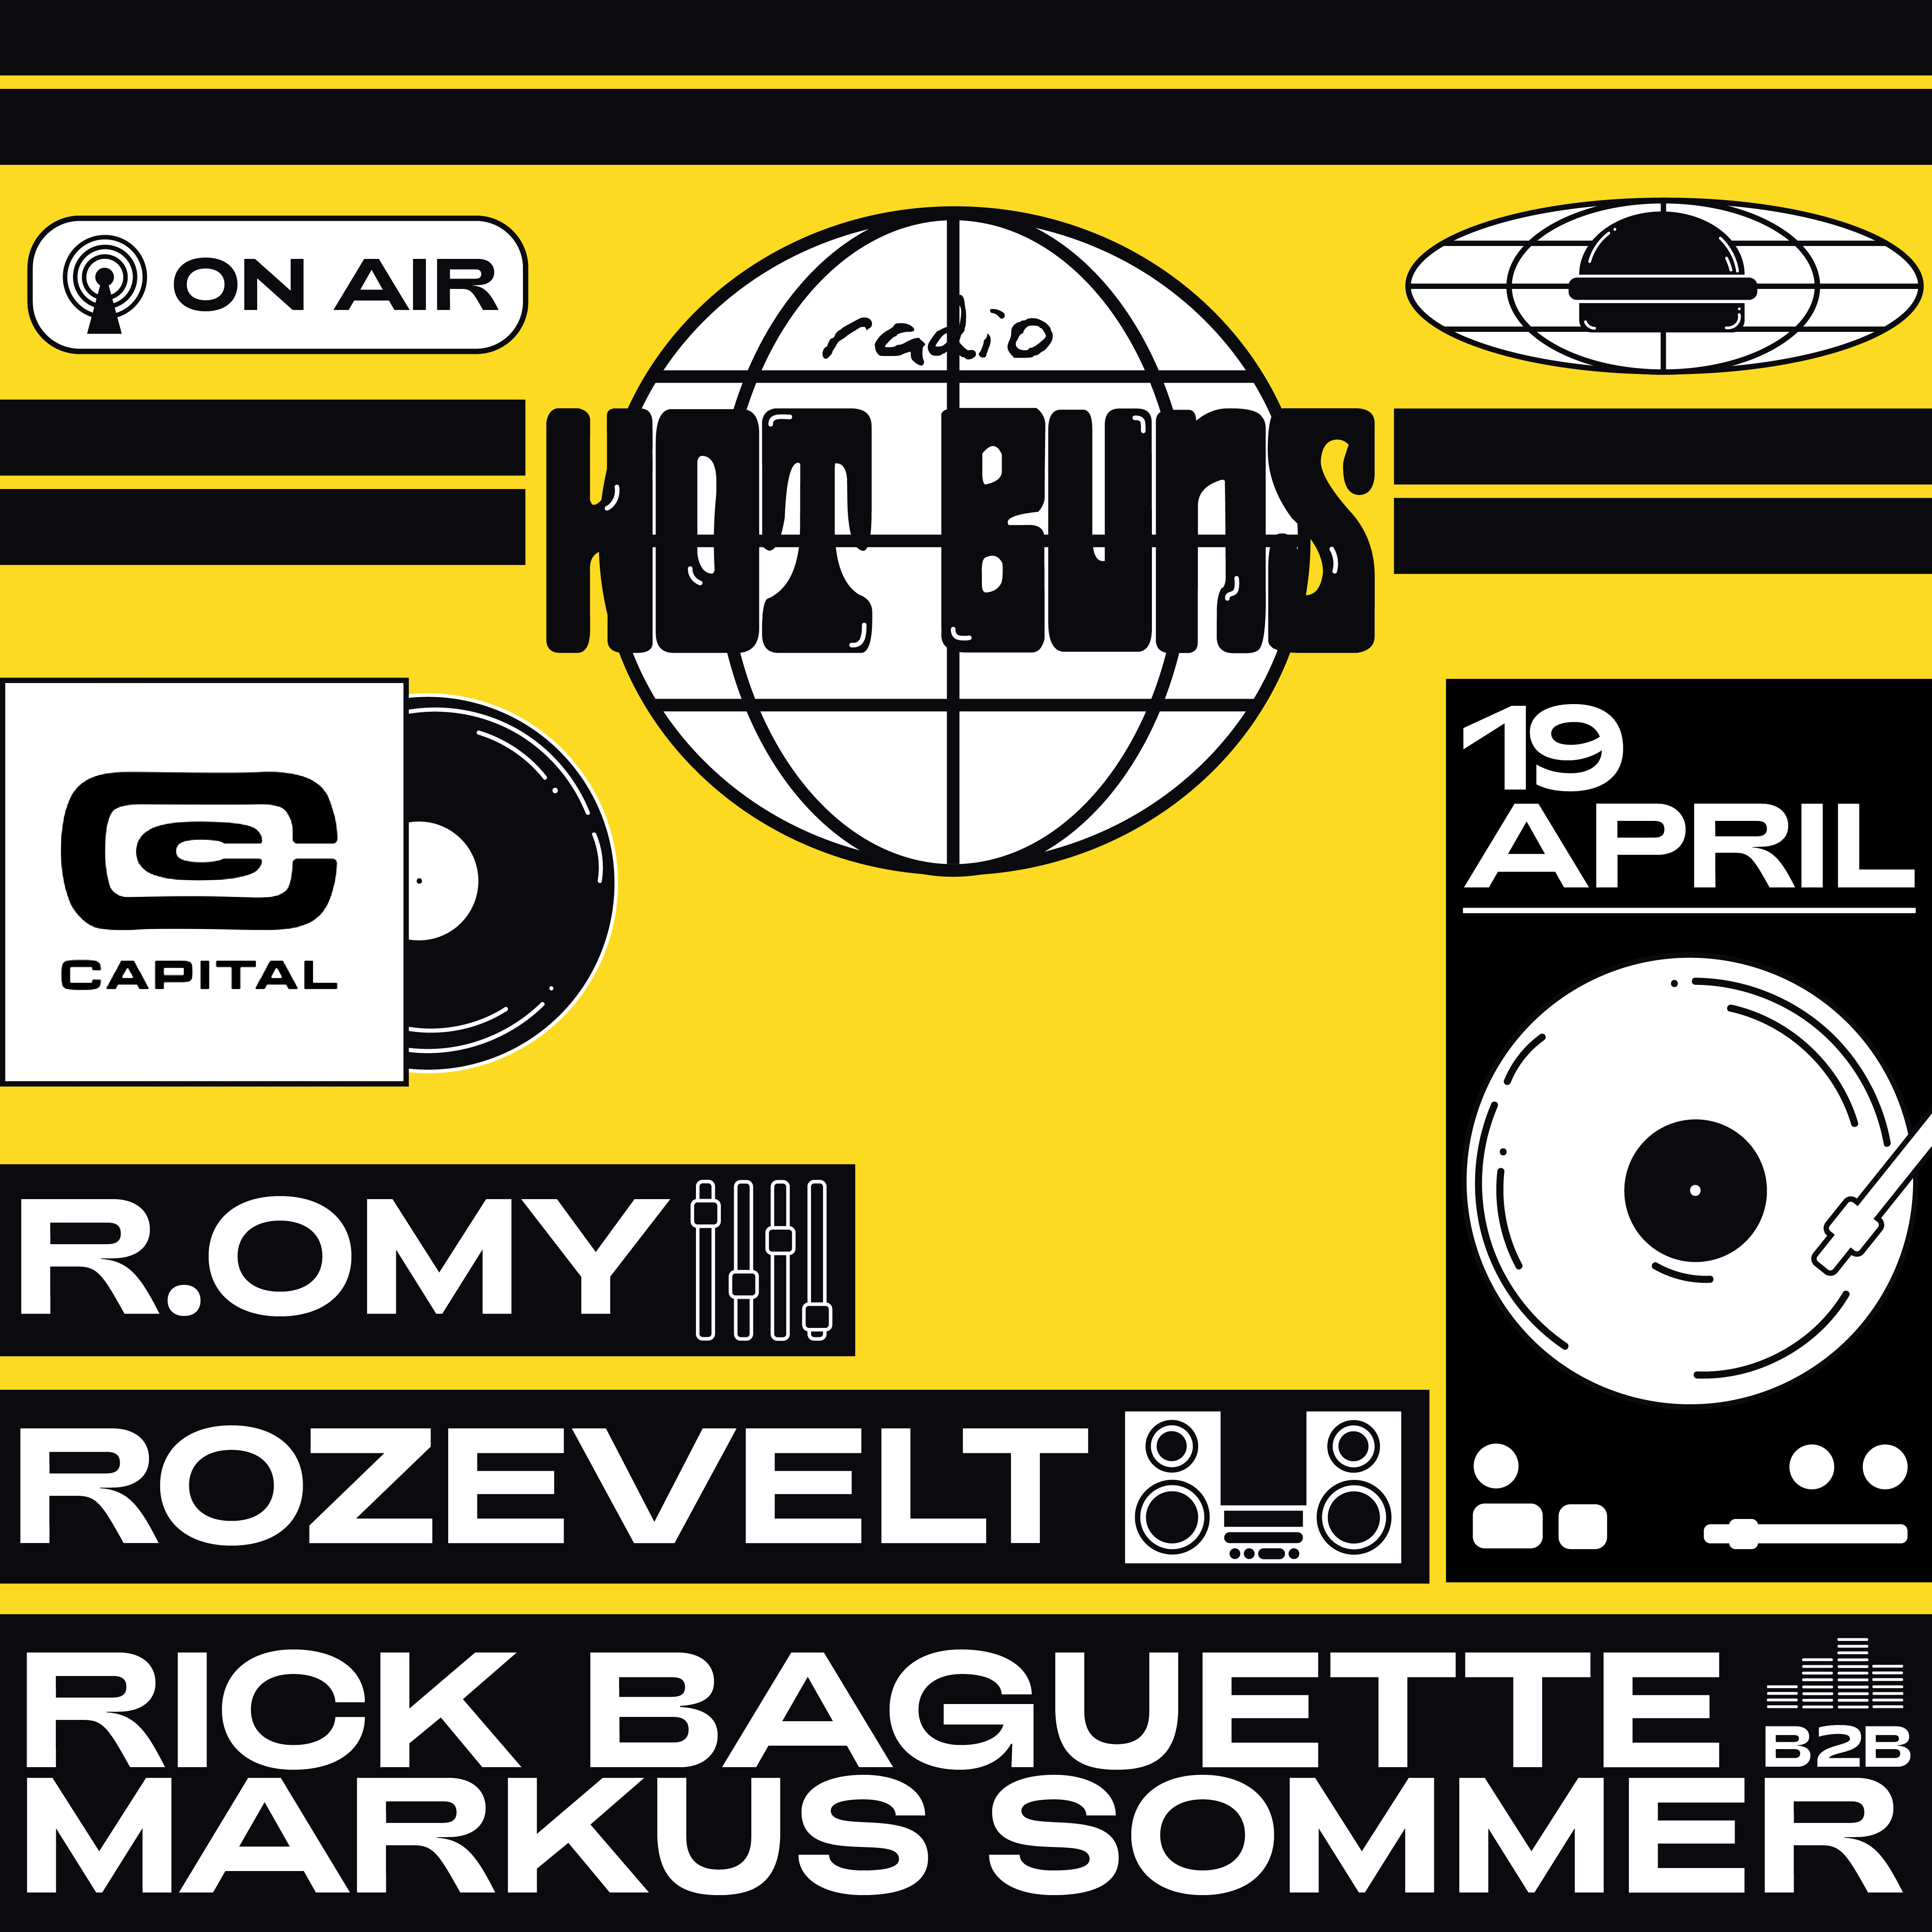 Radio Hot Buns with Markus Sommer, R.omy, Rozevelt & Rick Baguette - フライヤー表